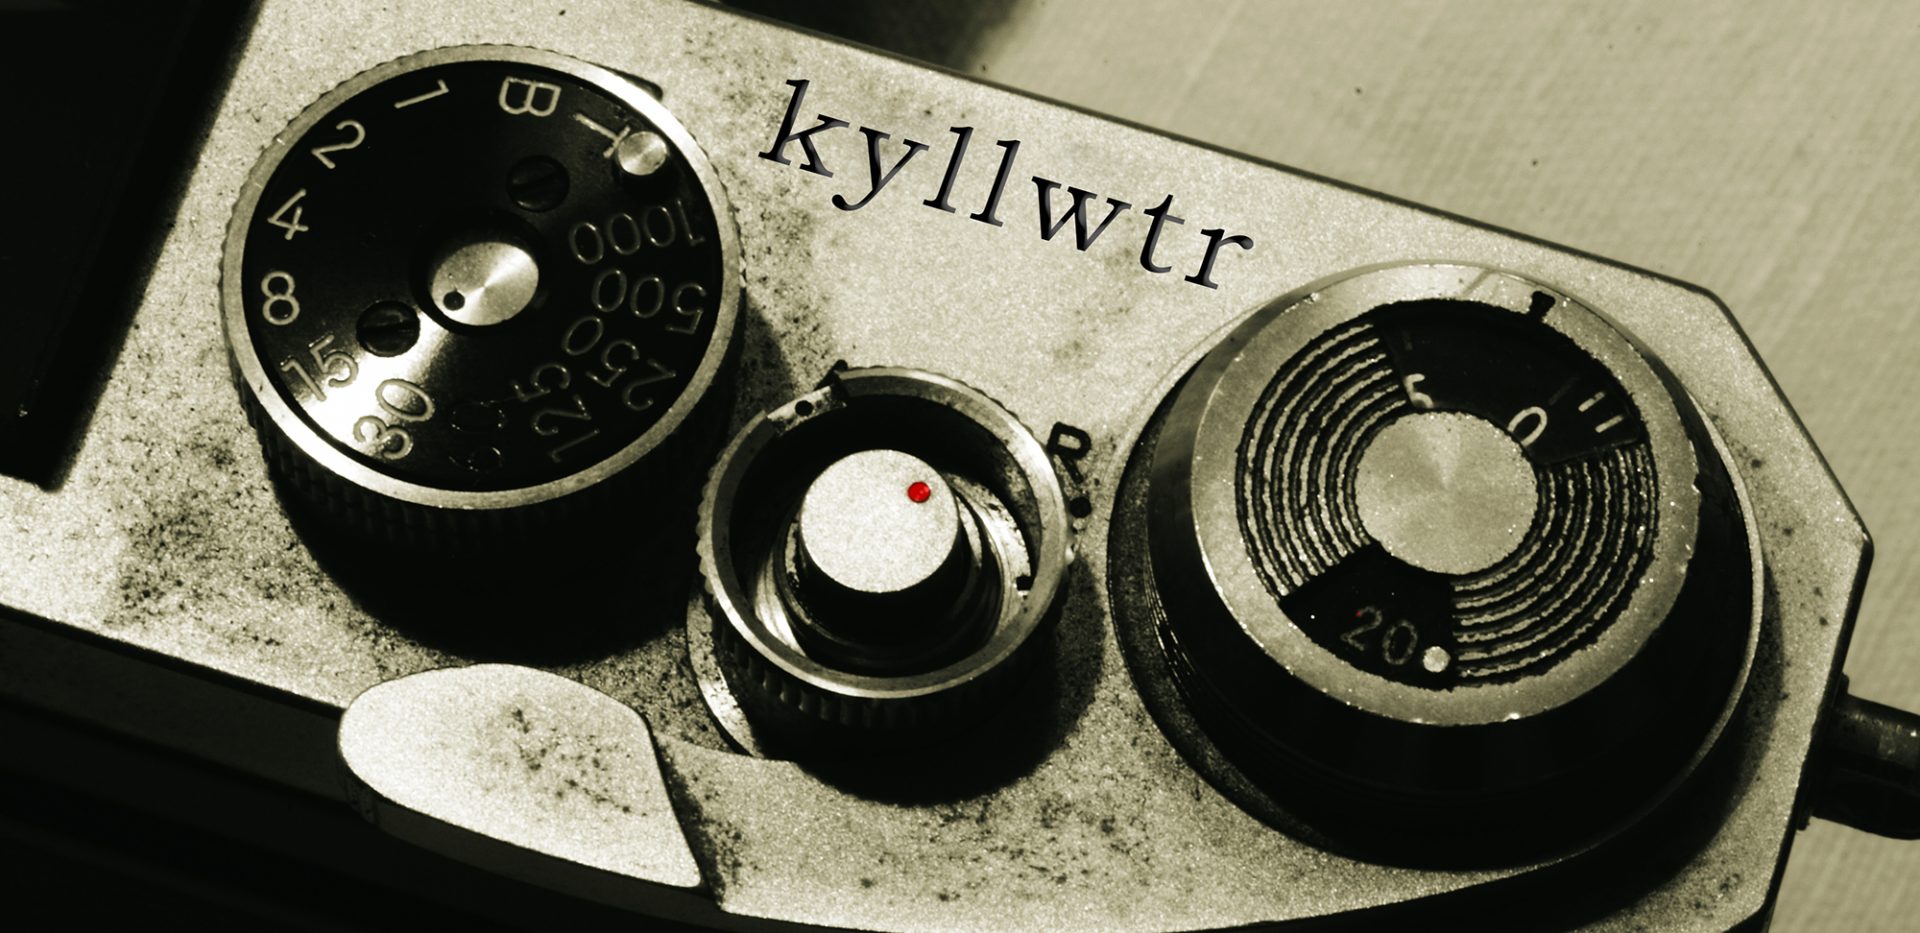 Kyllwtr's blog